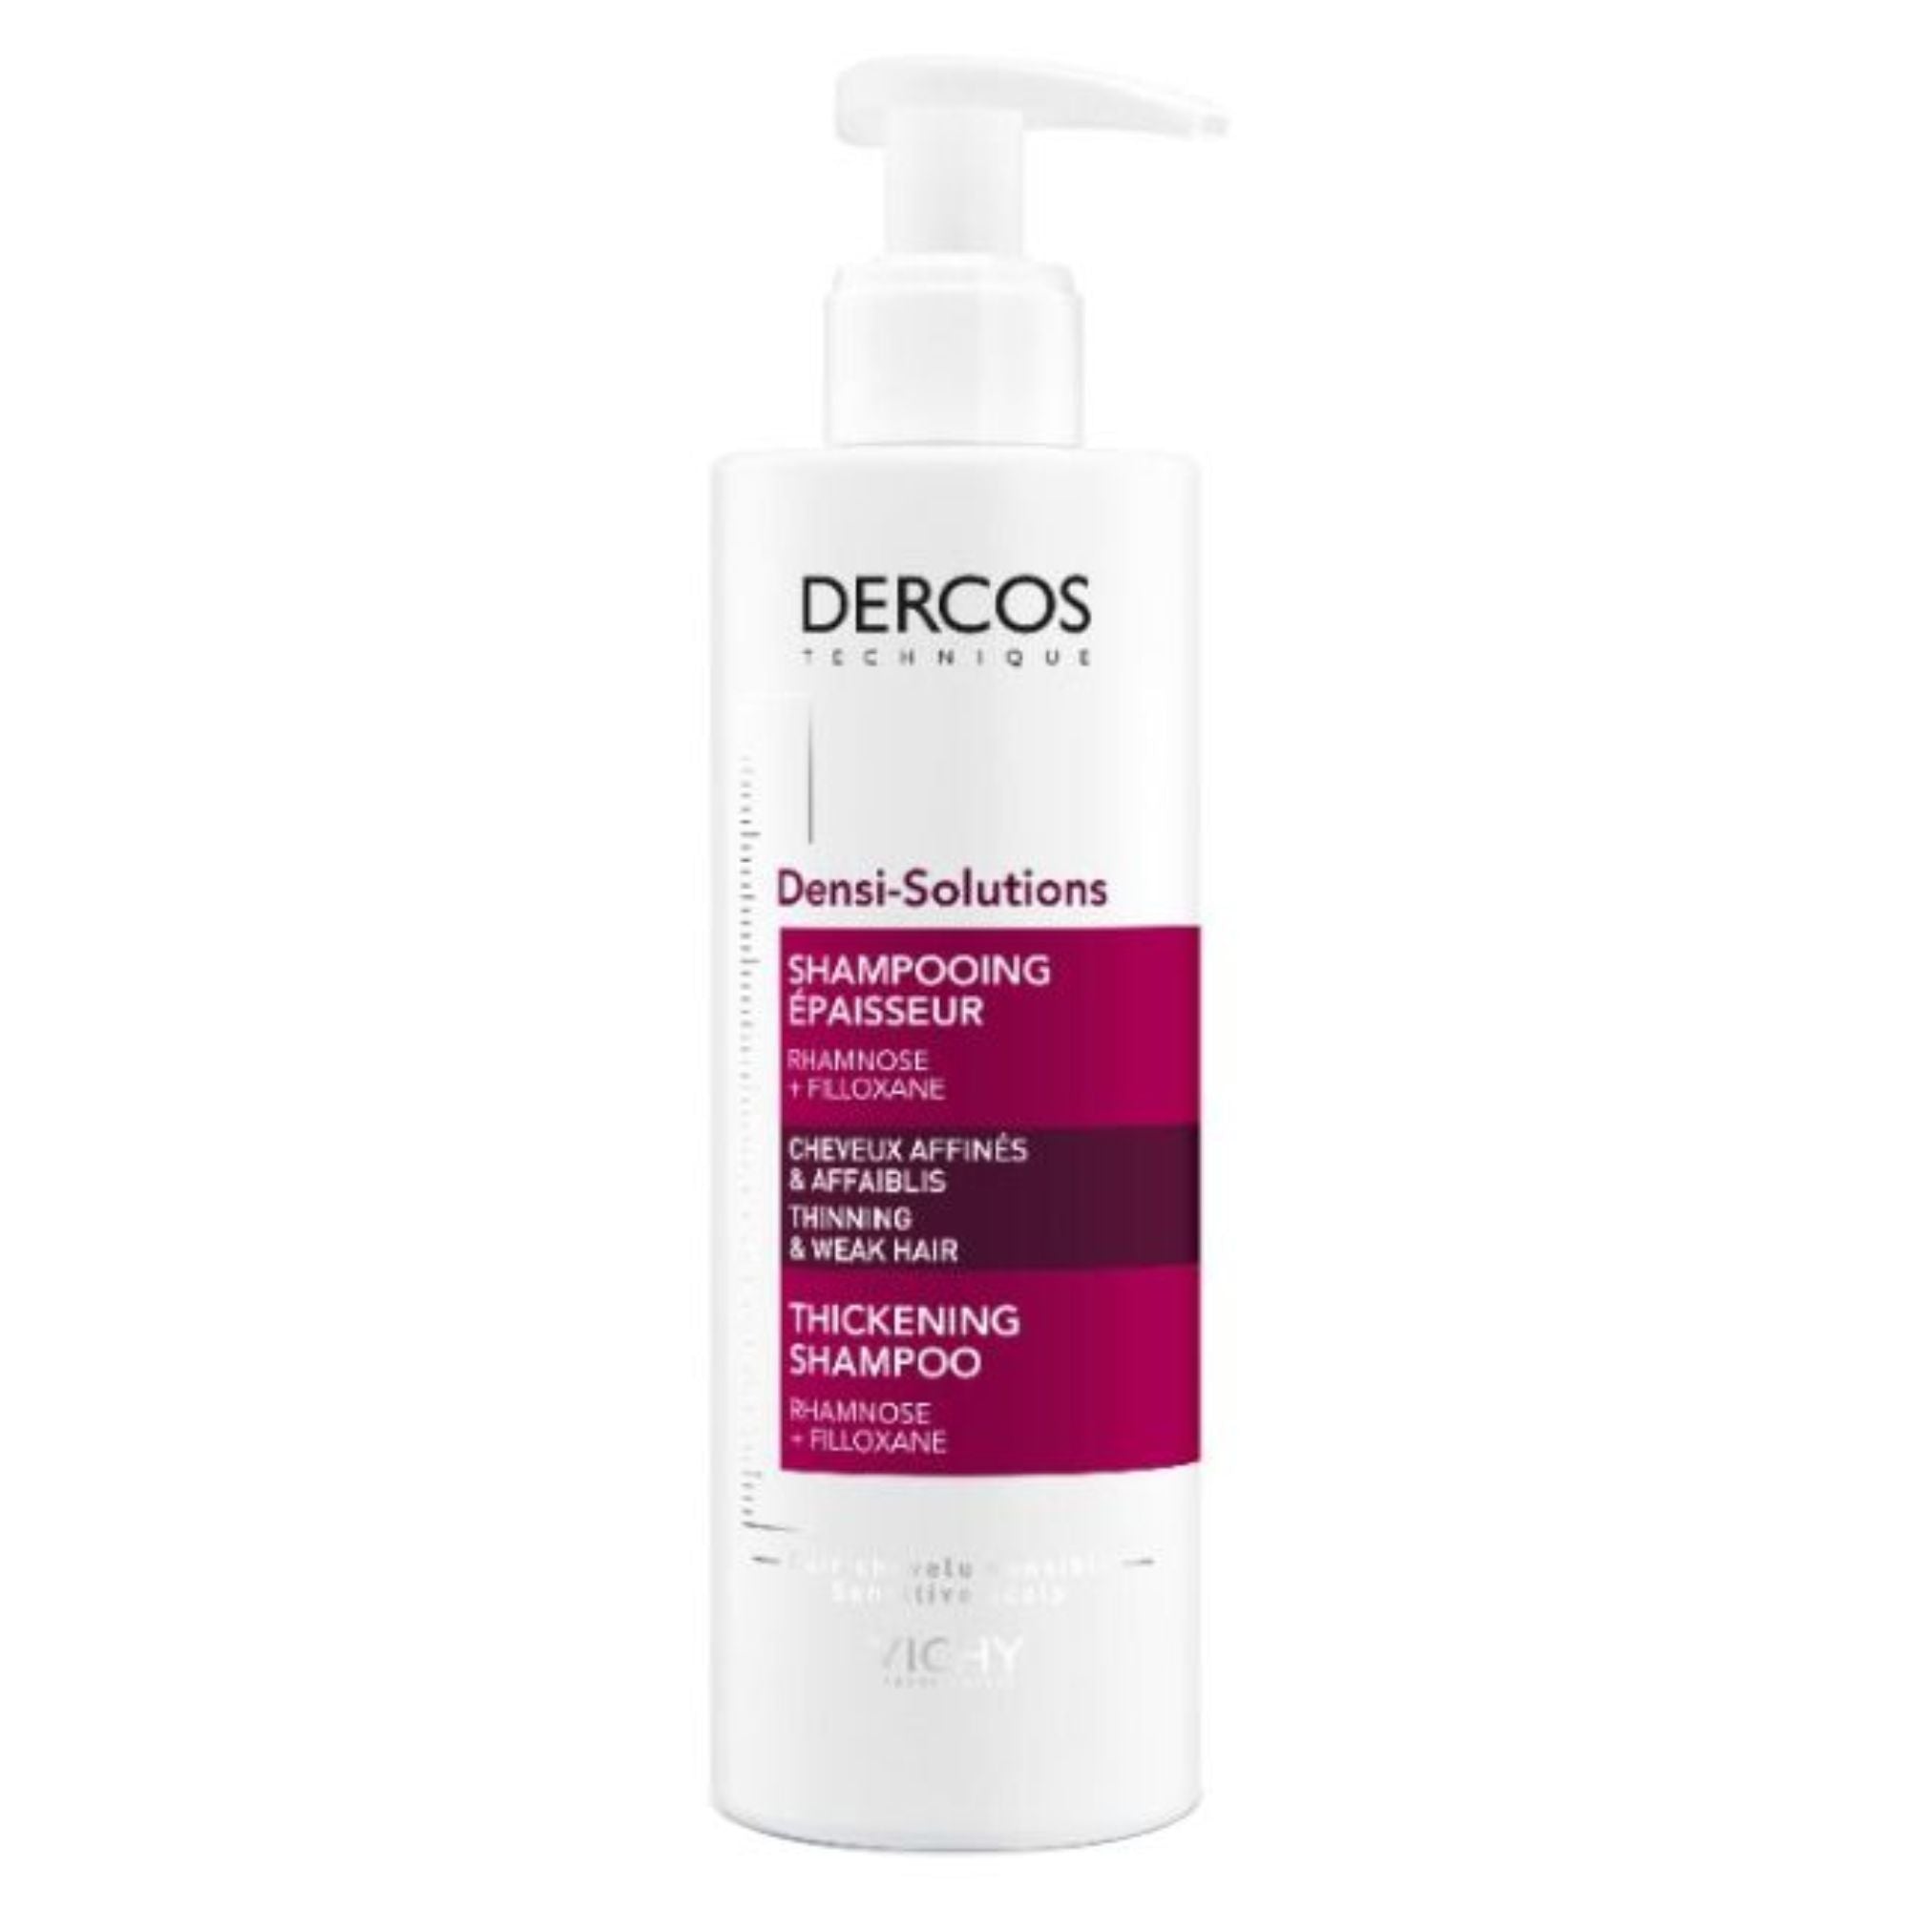 Vichy Dercos Technique Densi-Solutions Thickening Shampoo 400ml